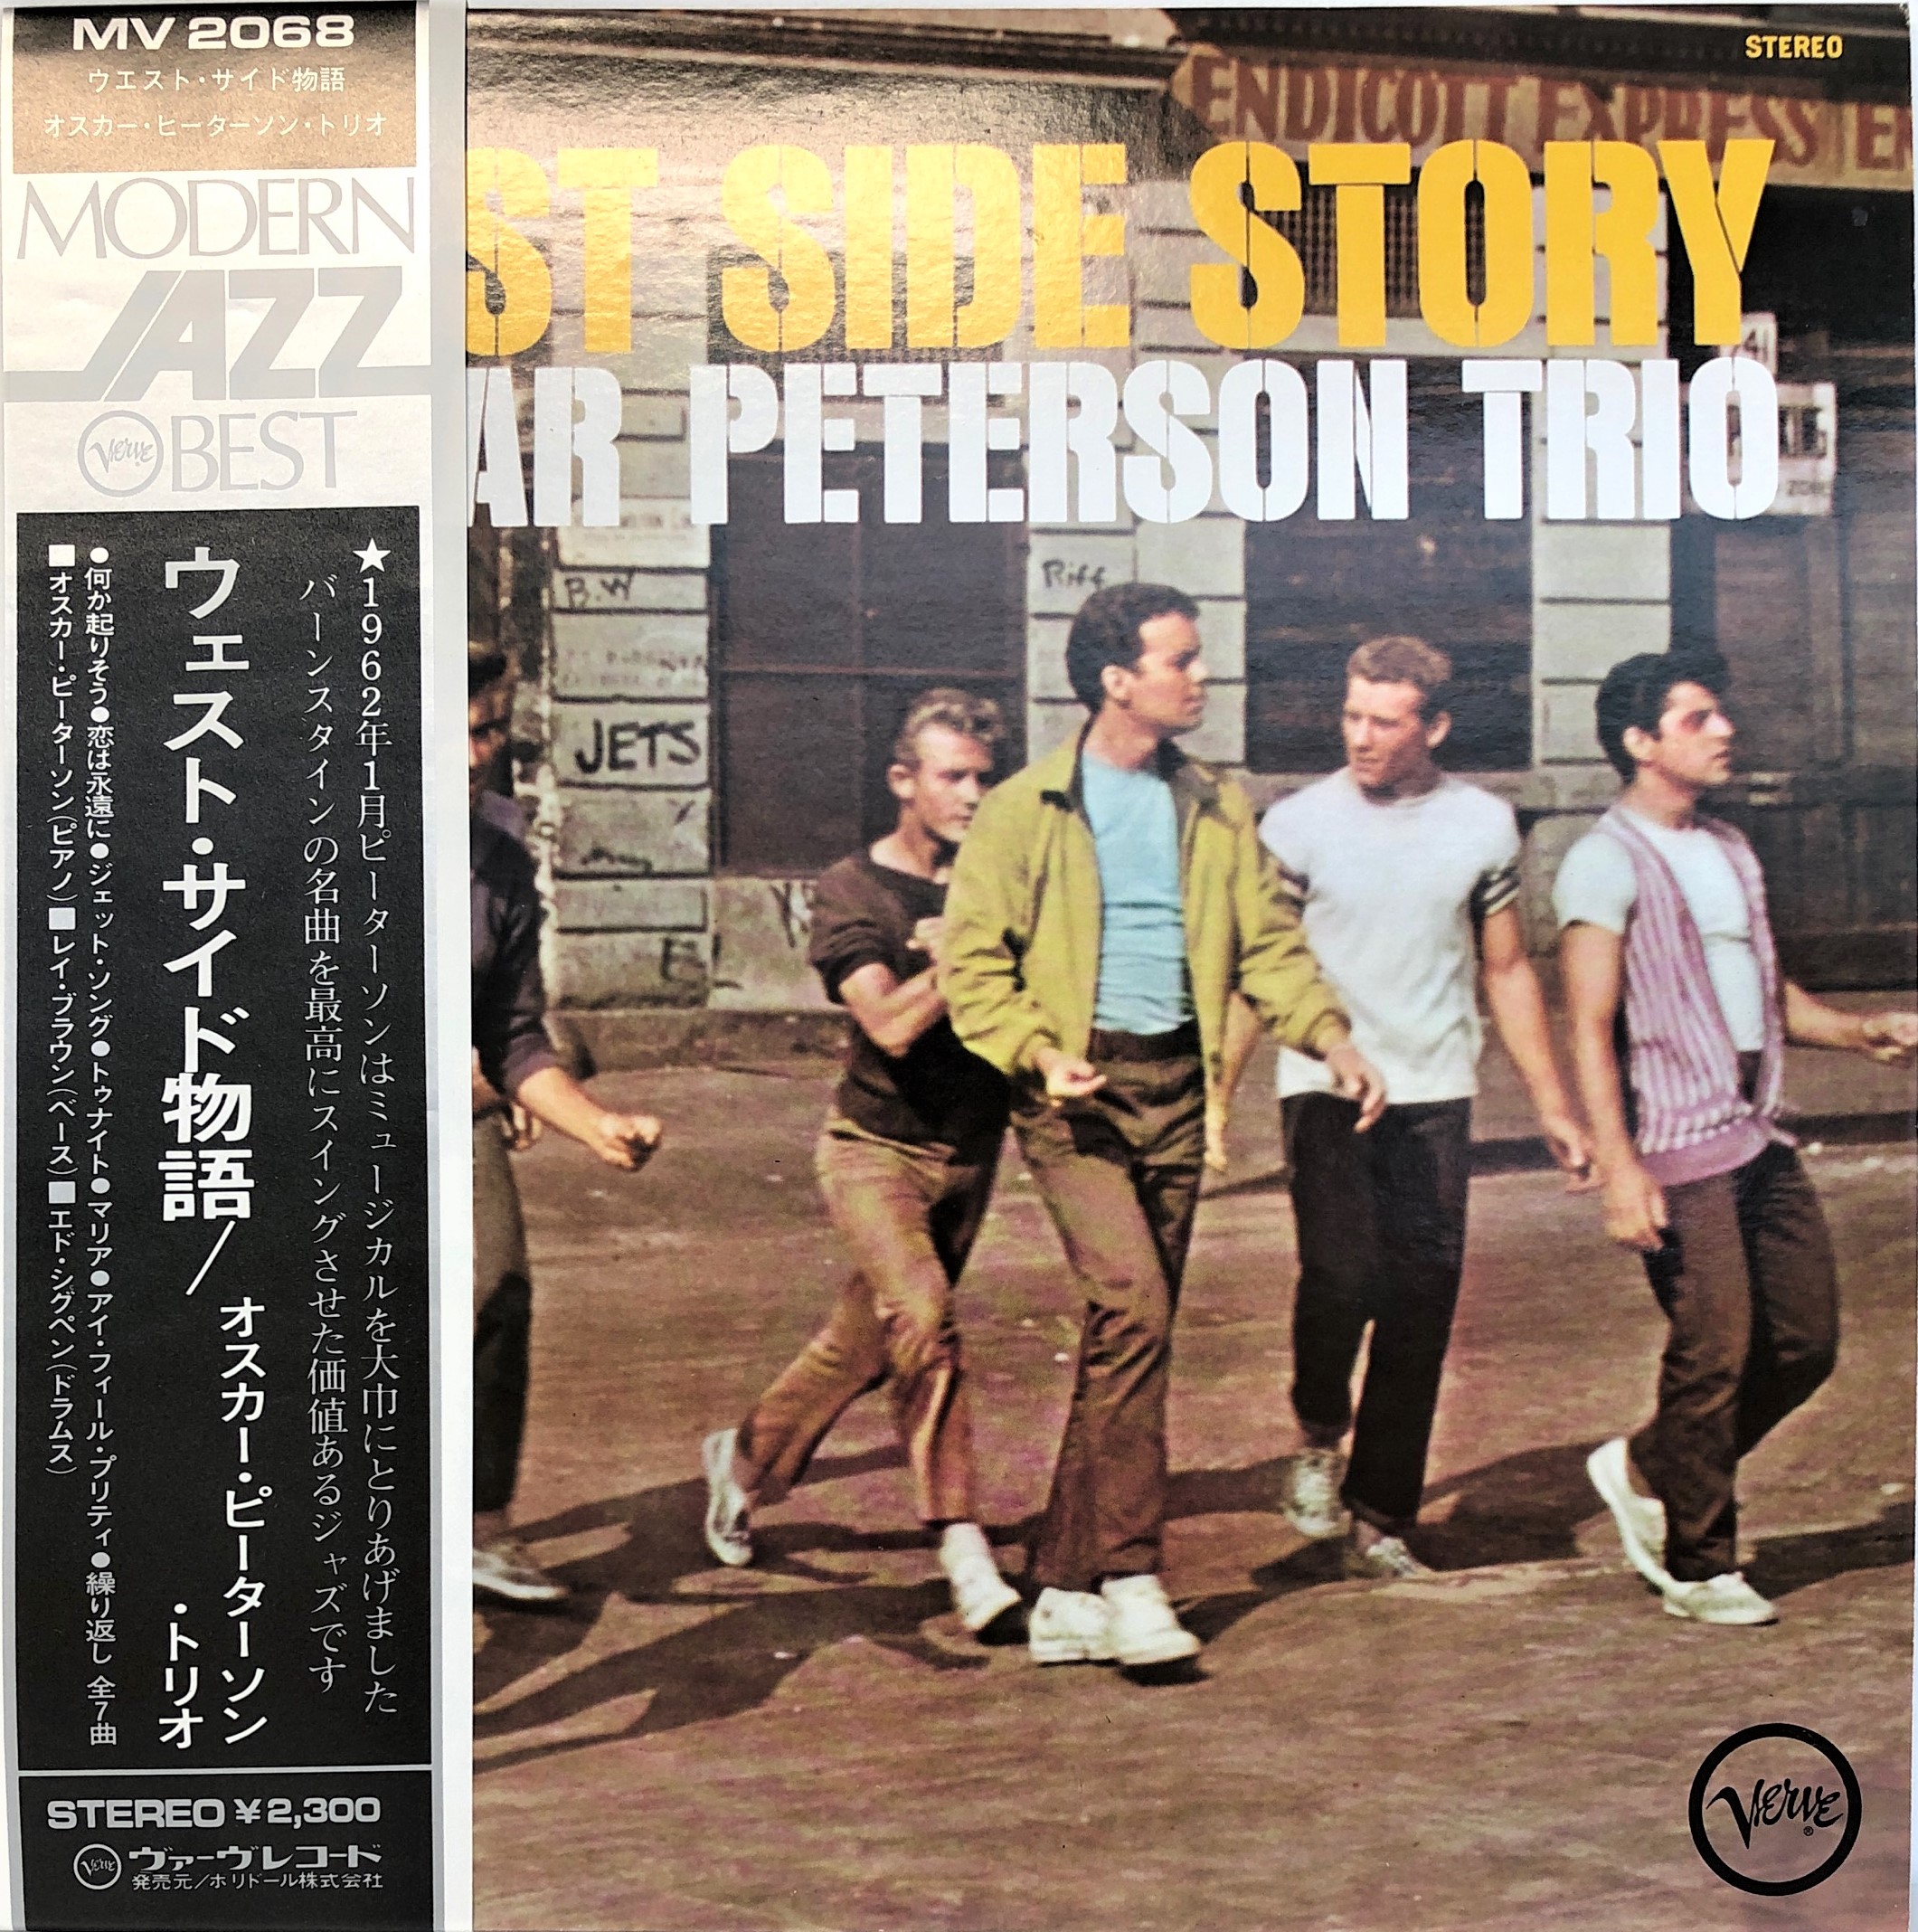 Oscar Peterson Trio ‎– West Side Story | 中古レコード通販・買取の